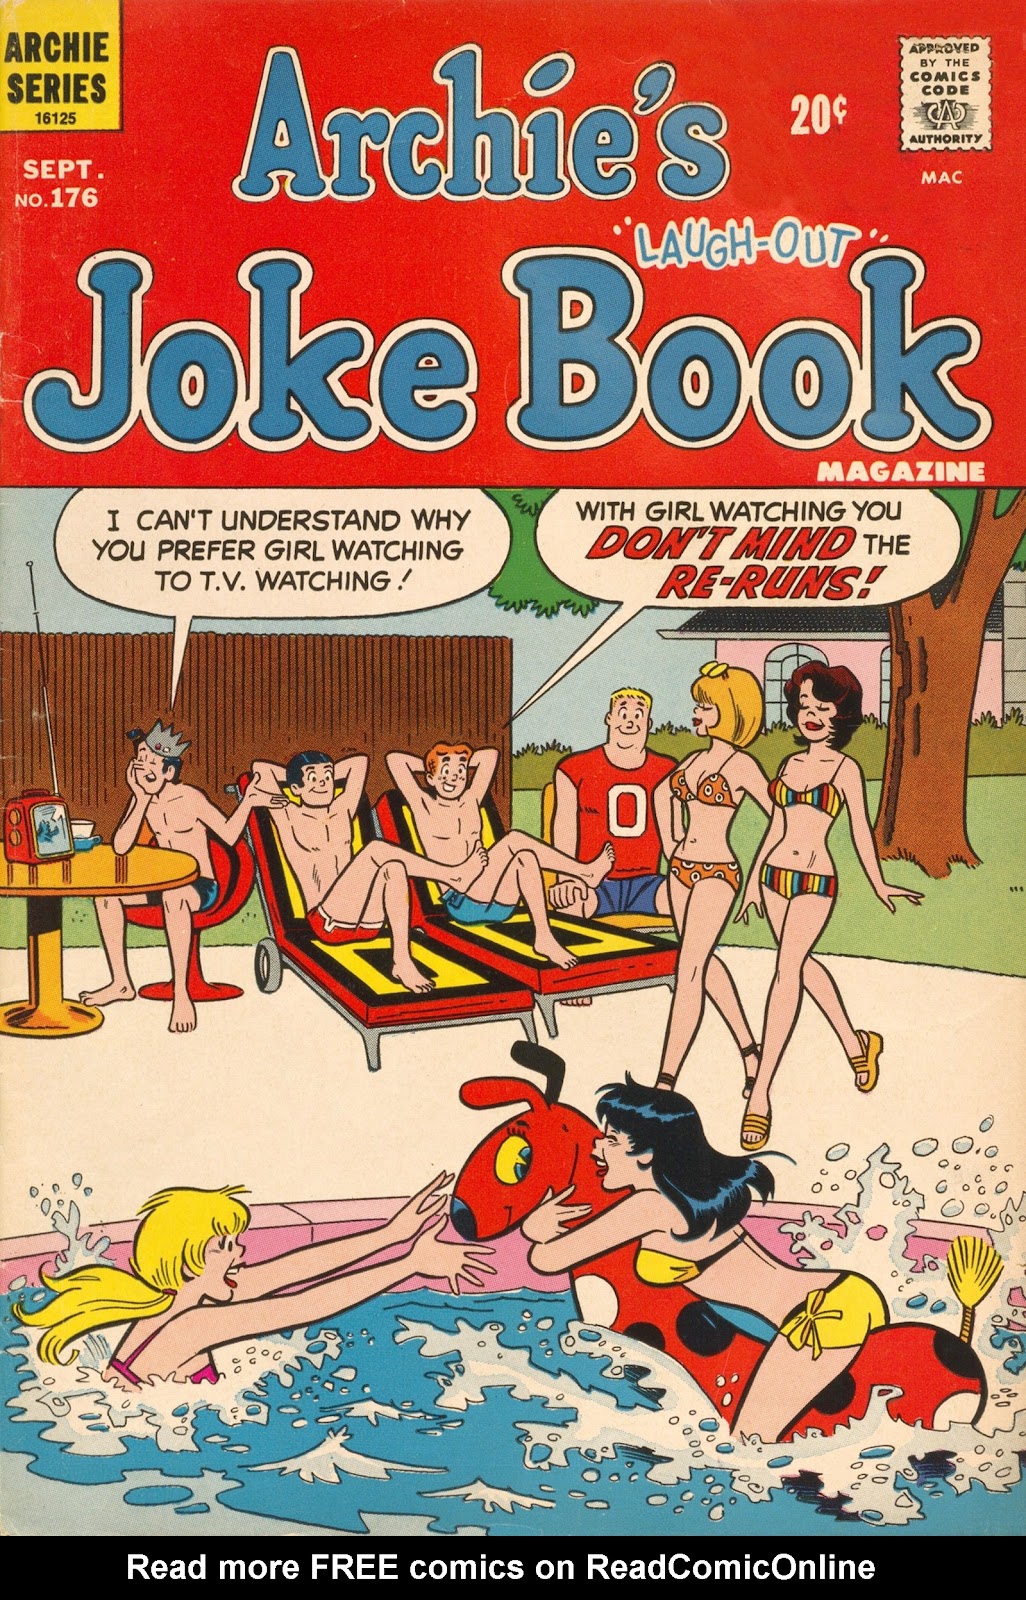 Archie's Joke Book Magazine issue 176 - Page 1